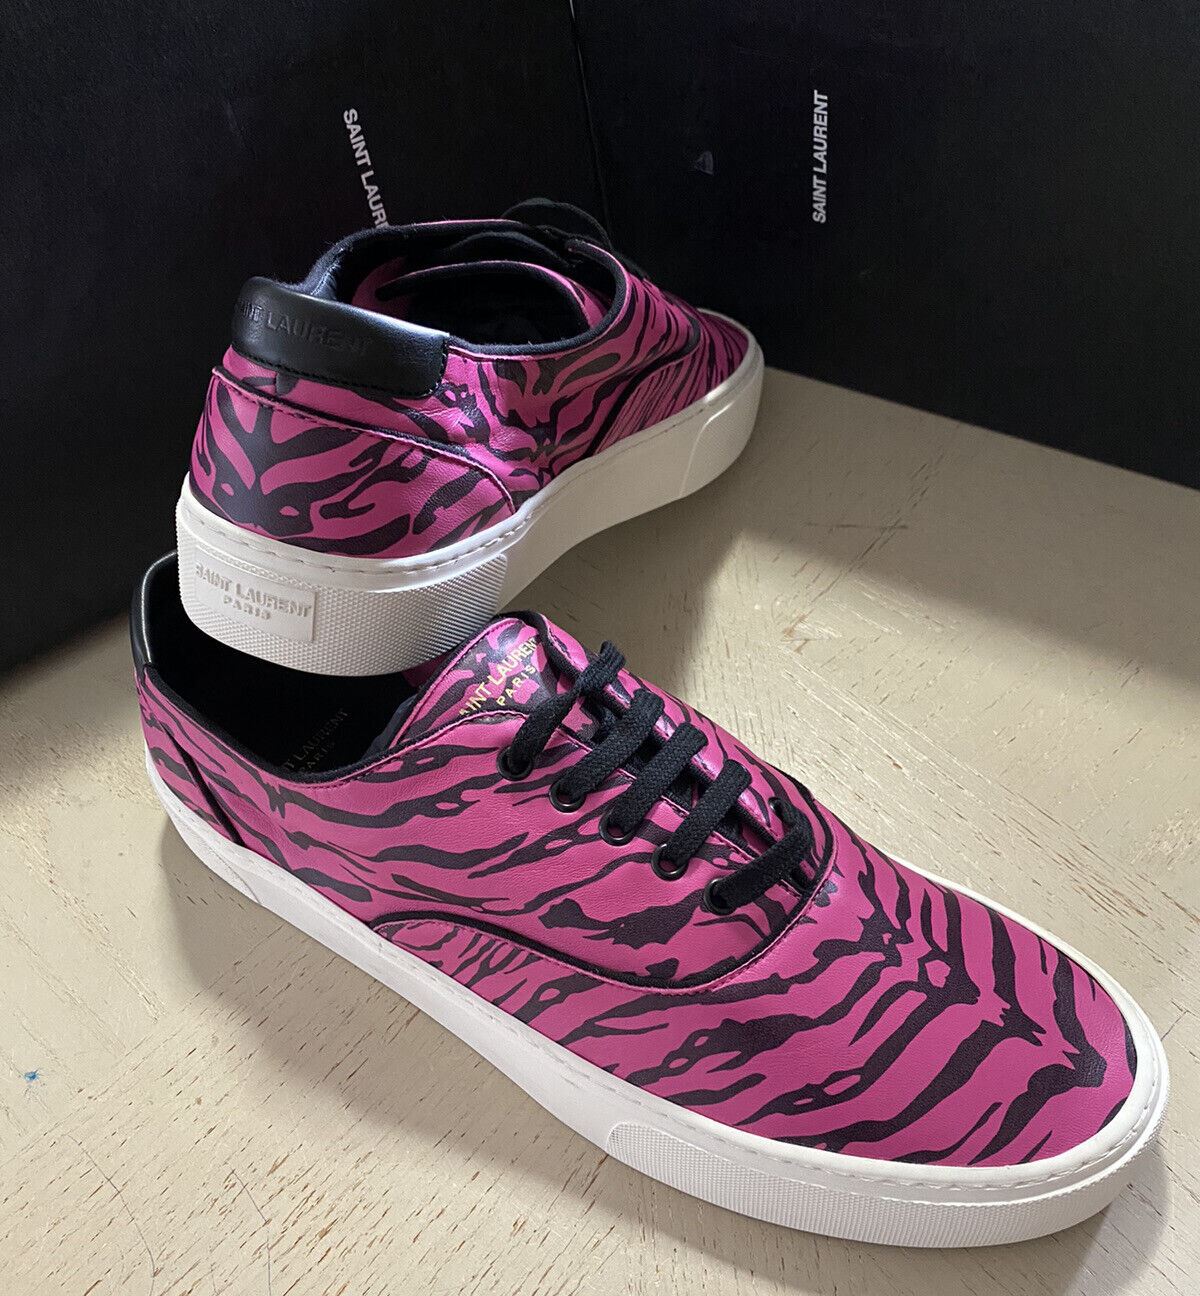 NIB Saint Laurent Men’s Leather Sneakers Shoes Black/Pink 9.5 US/42.5 Eu Italy